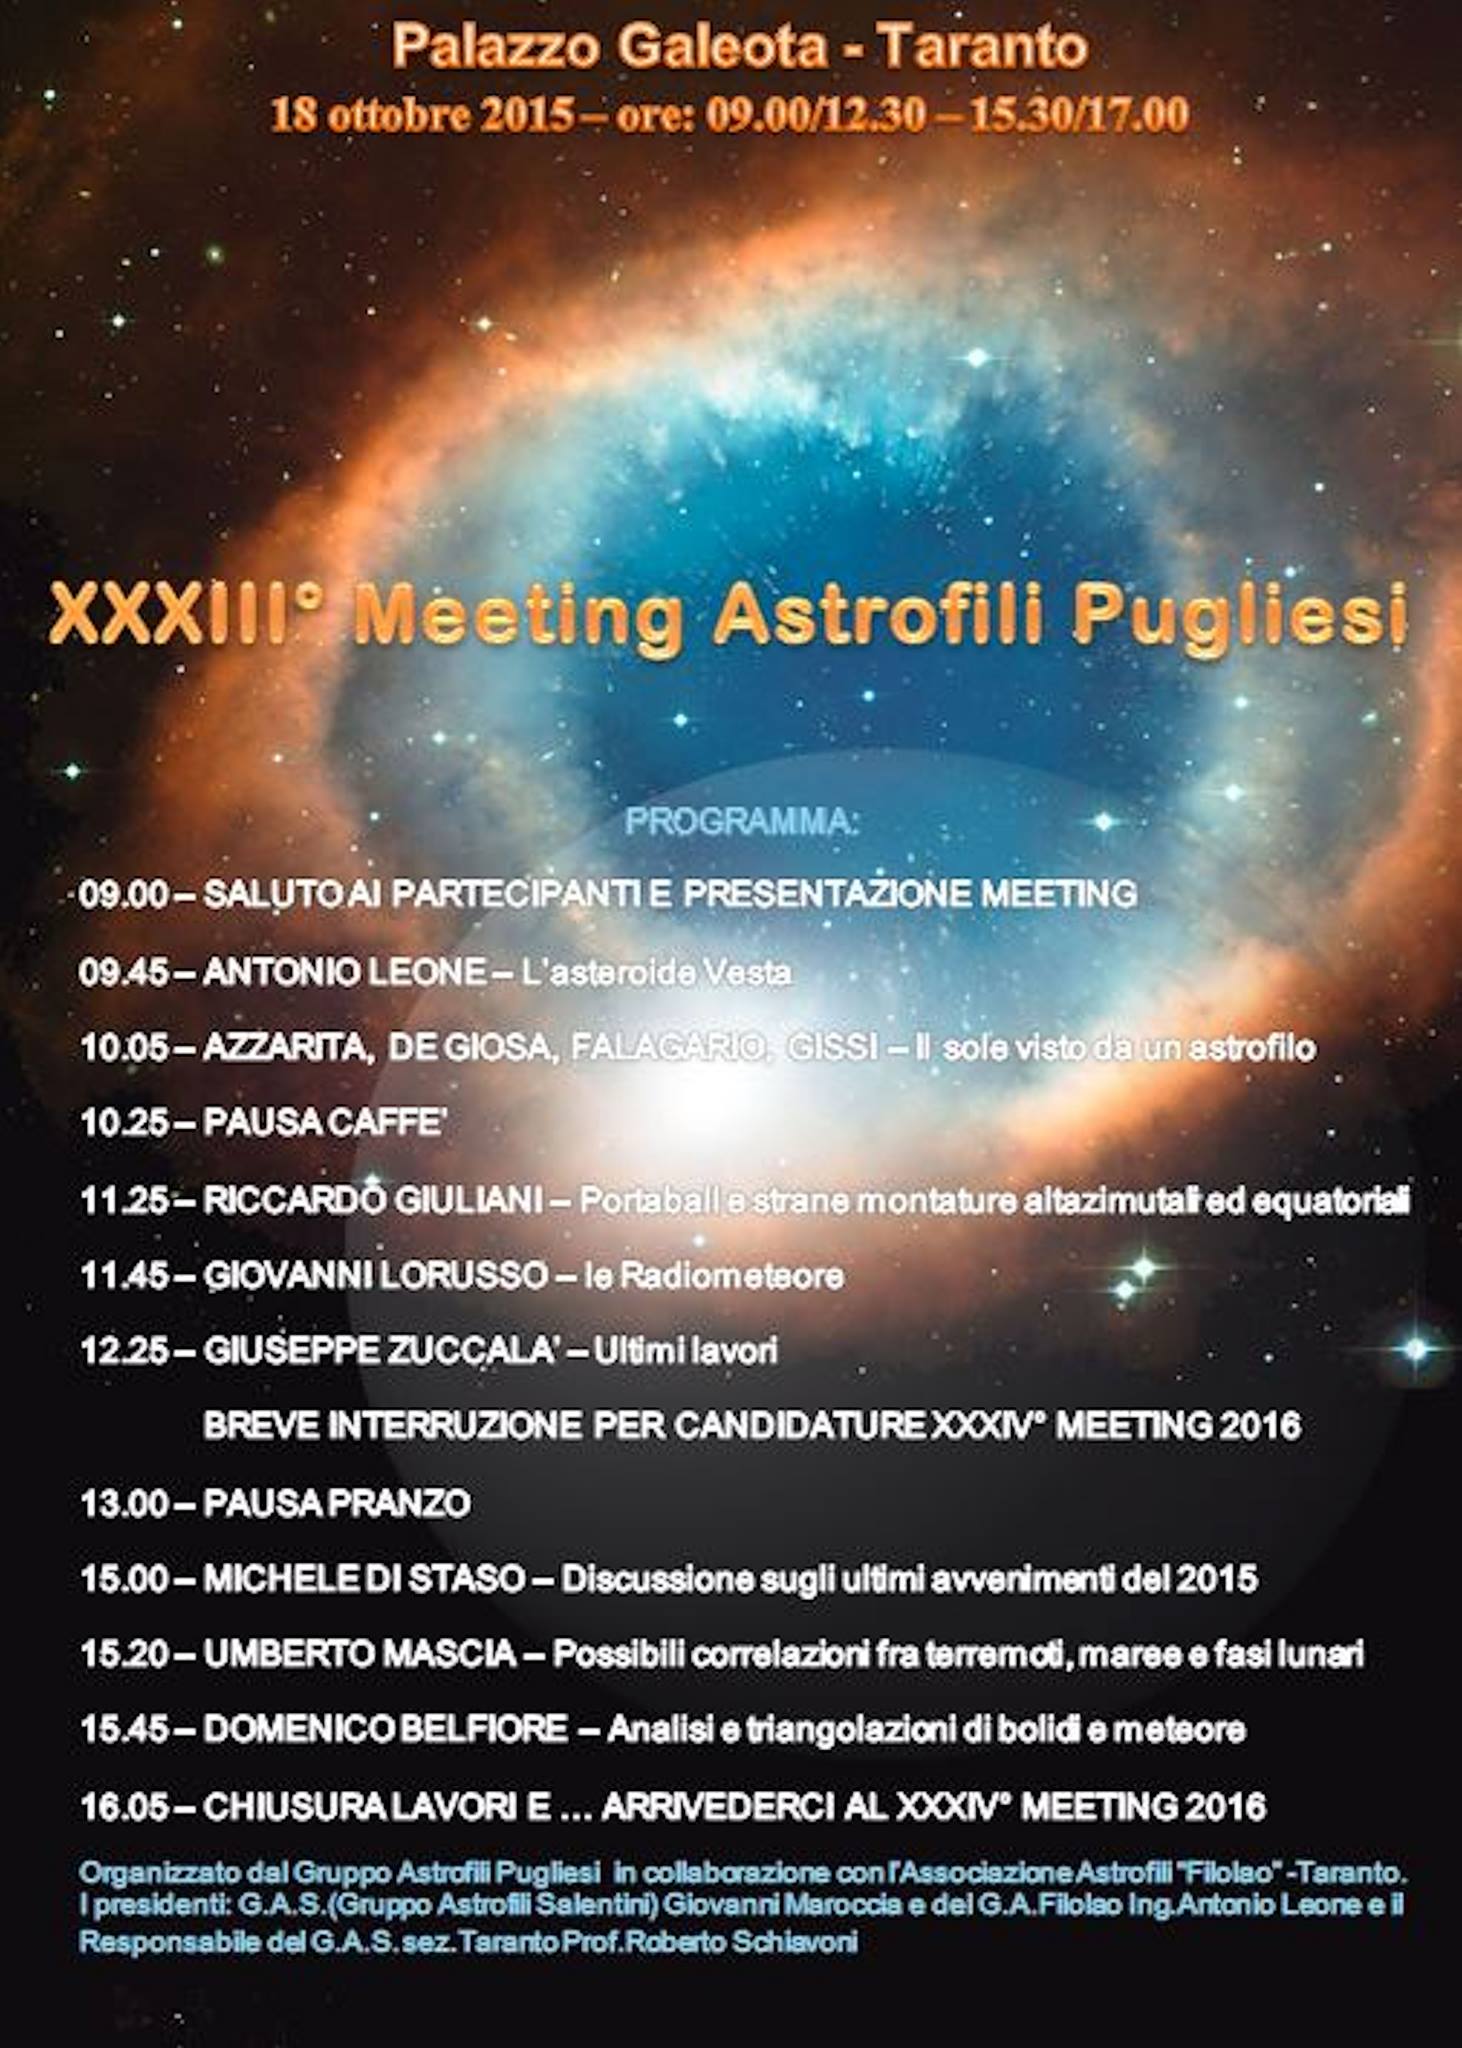 XXXIII° Meeting Astrofili Pugliesi